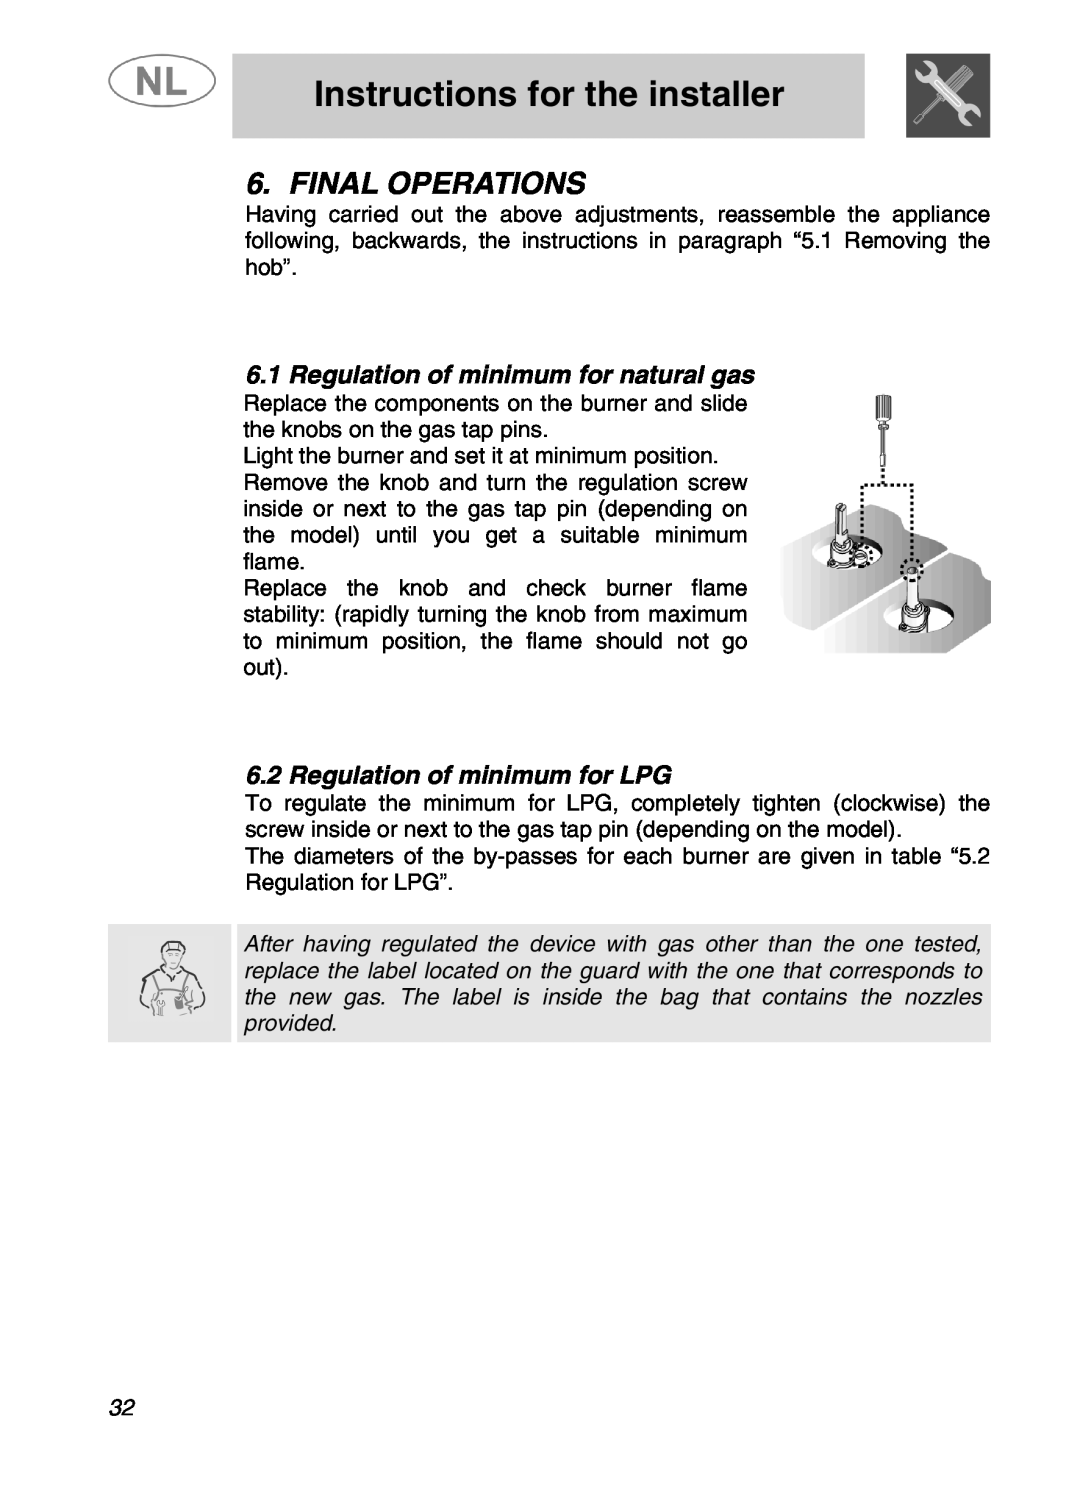 Smeg SLRV596X1 manual Final Operations, 6.1Regulation of minimum for natural gas, 6.2Regulation of minimum for LPG 